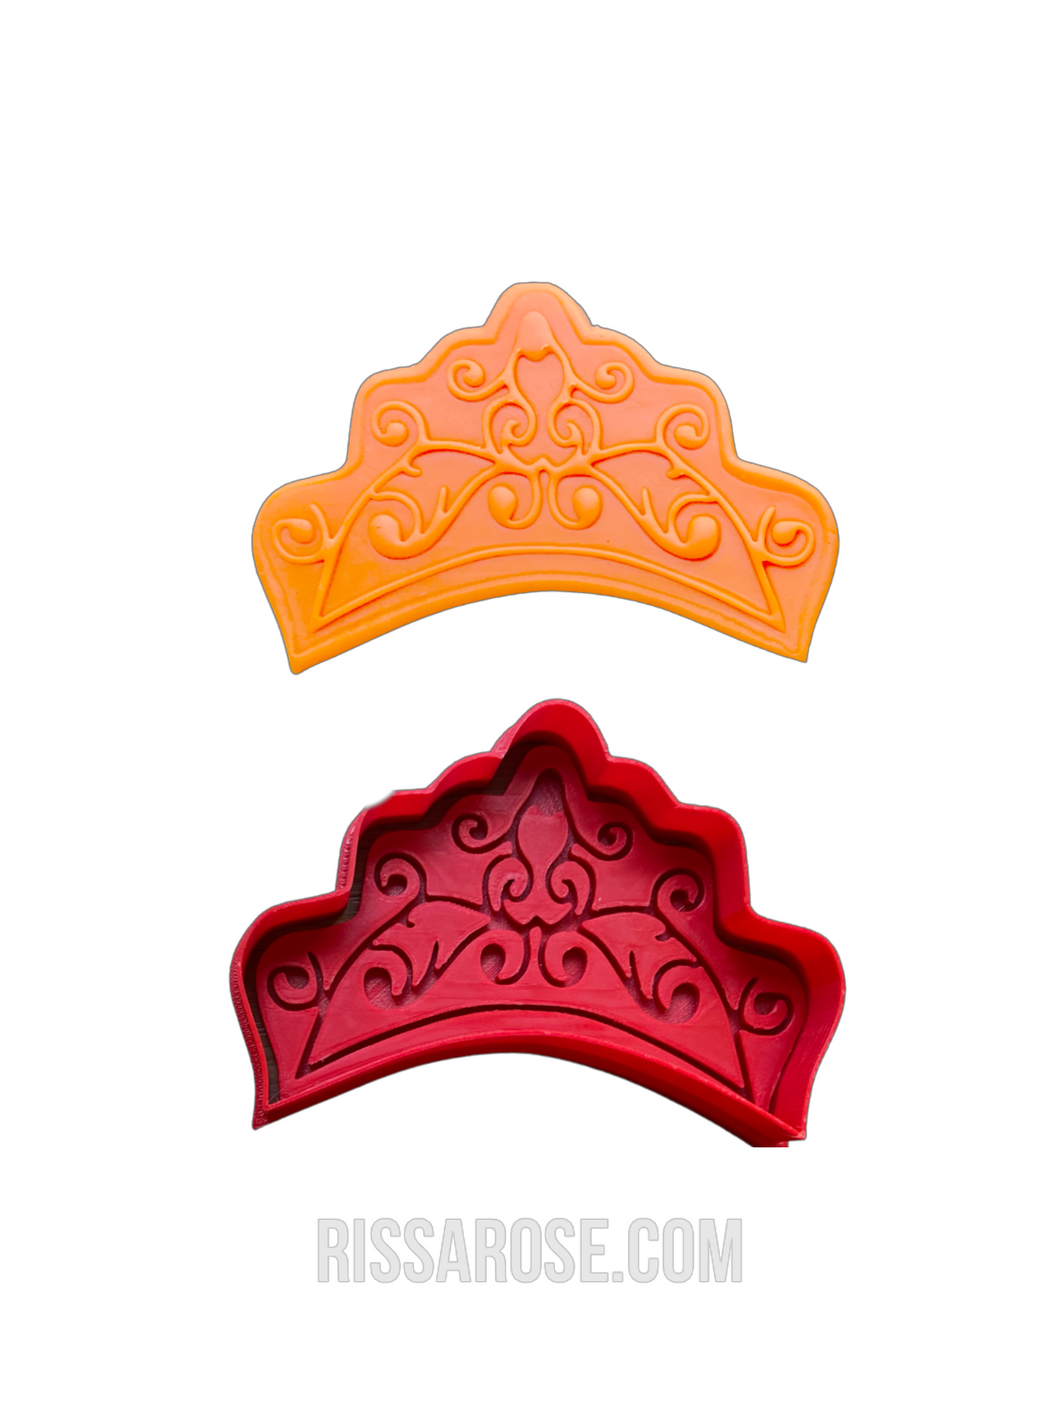 cinderella theme cookie cutter debosser tiara crown shoe pumpkin carriage raised pattern tiara